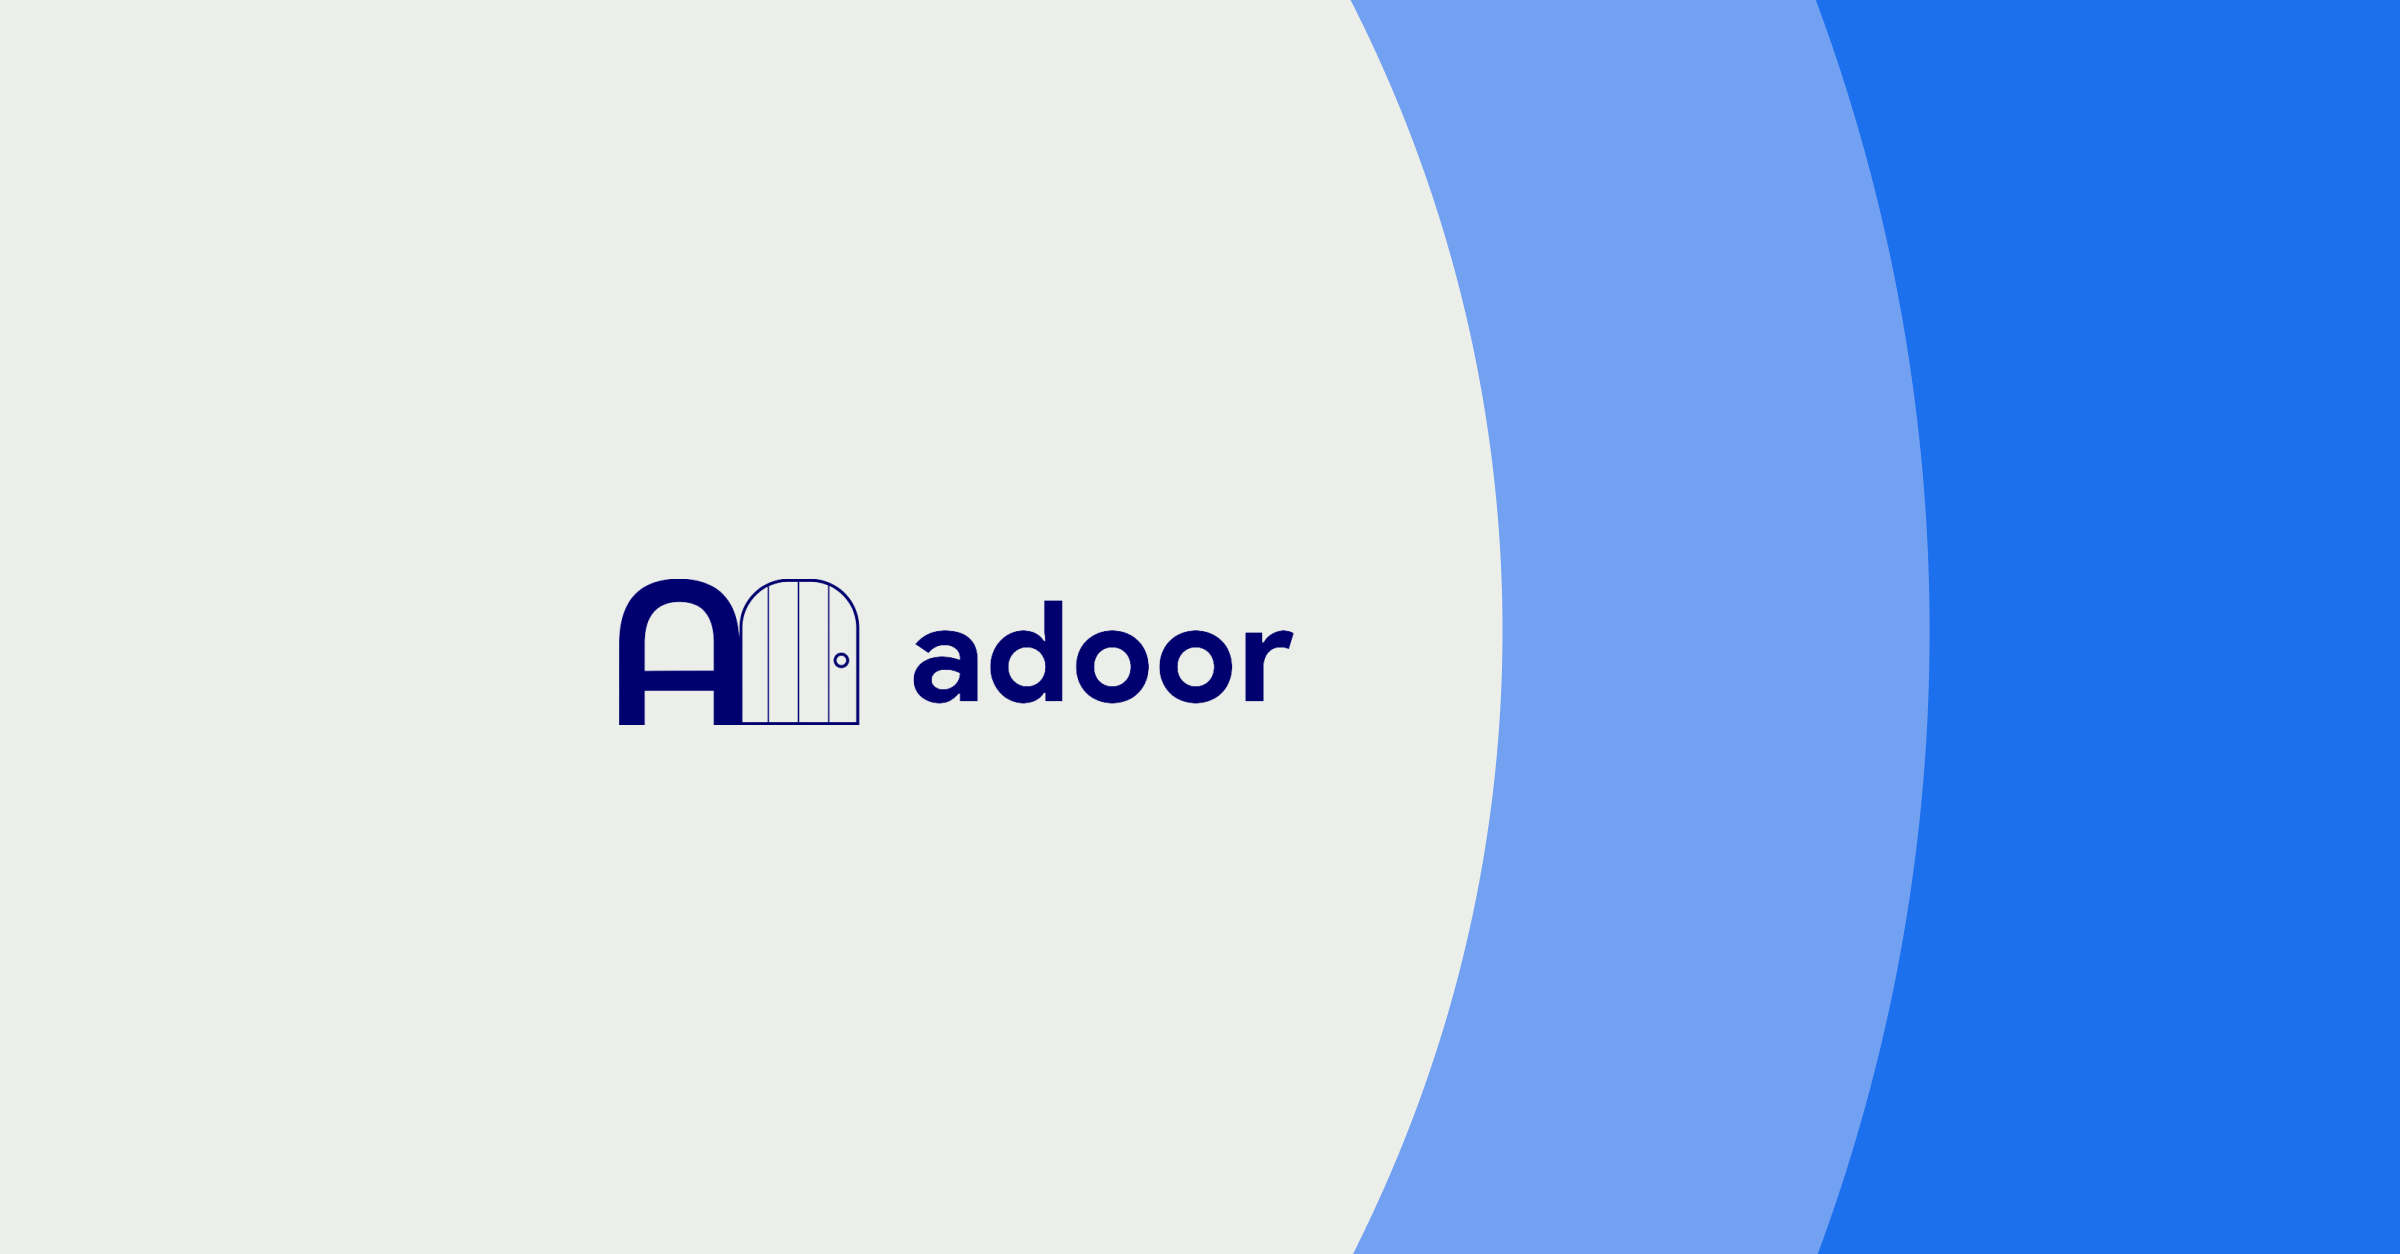 Adoor logo on grey background